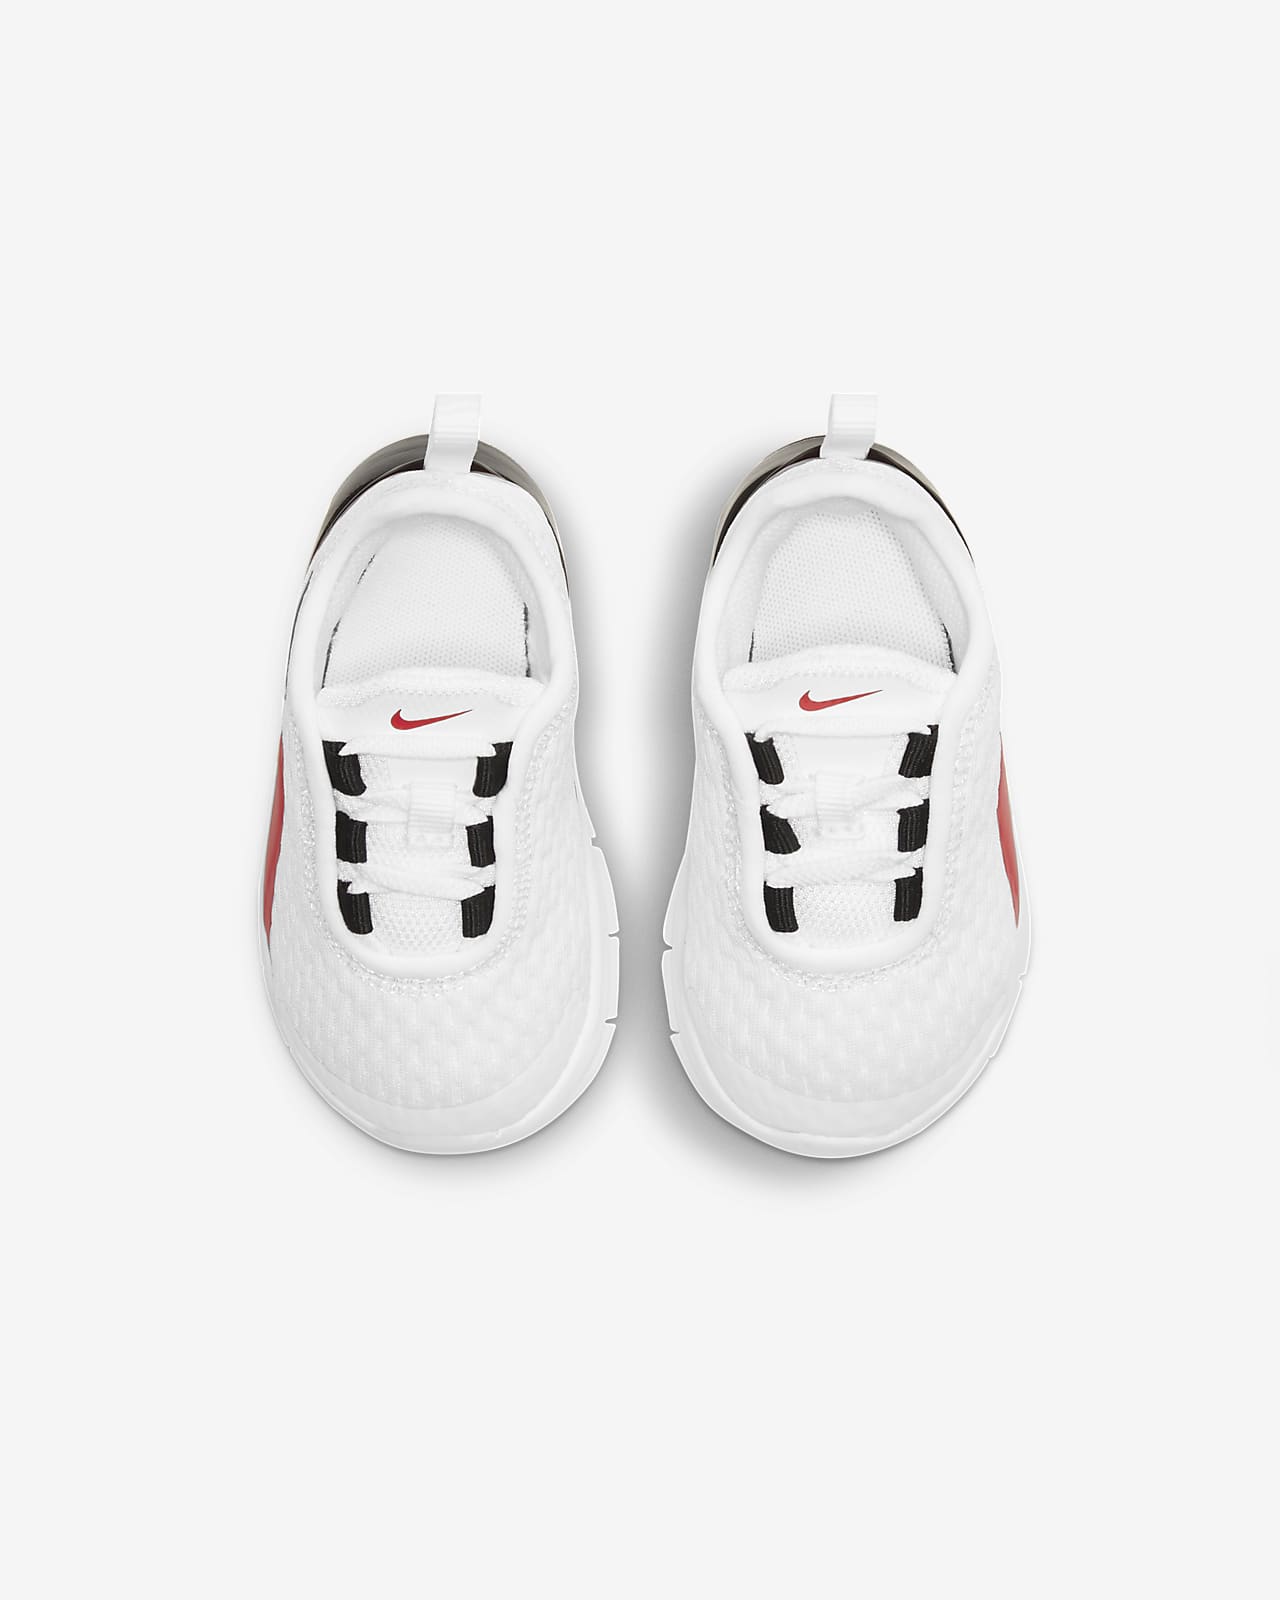 Nike Air Max Motion 2 Infant/Toddler 